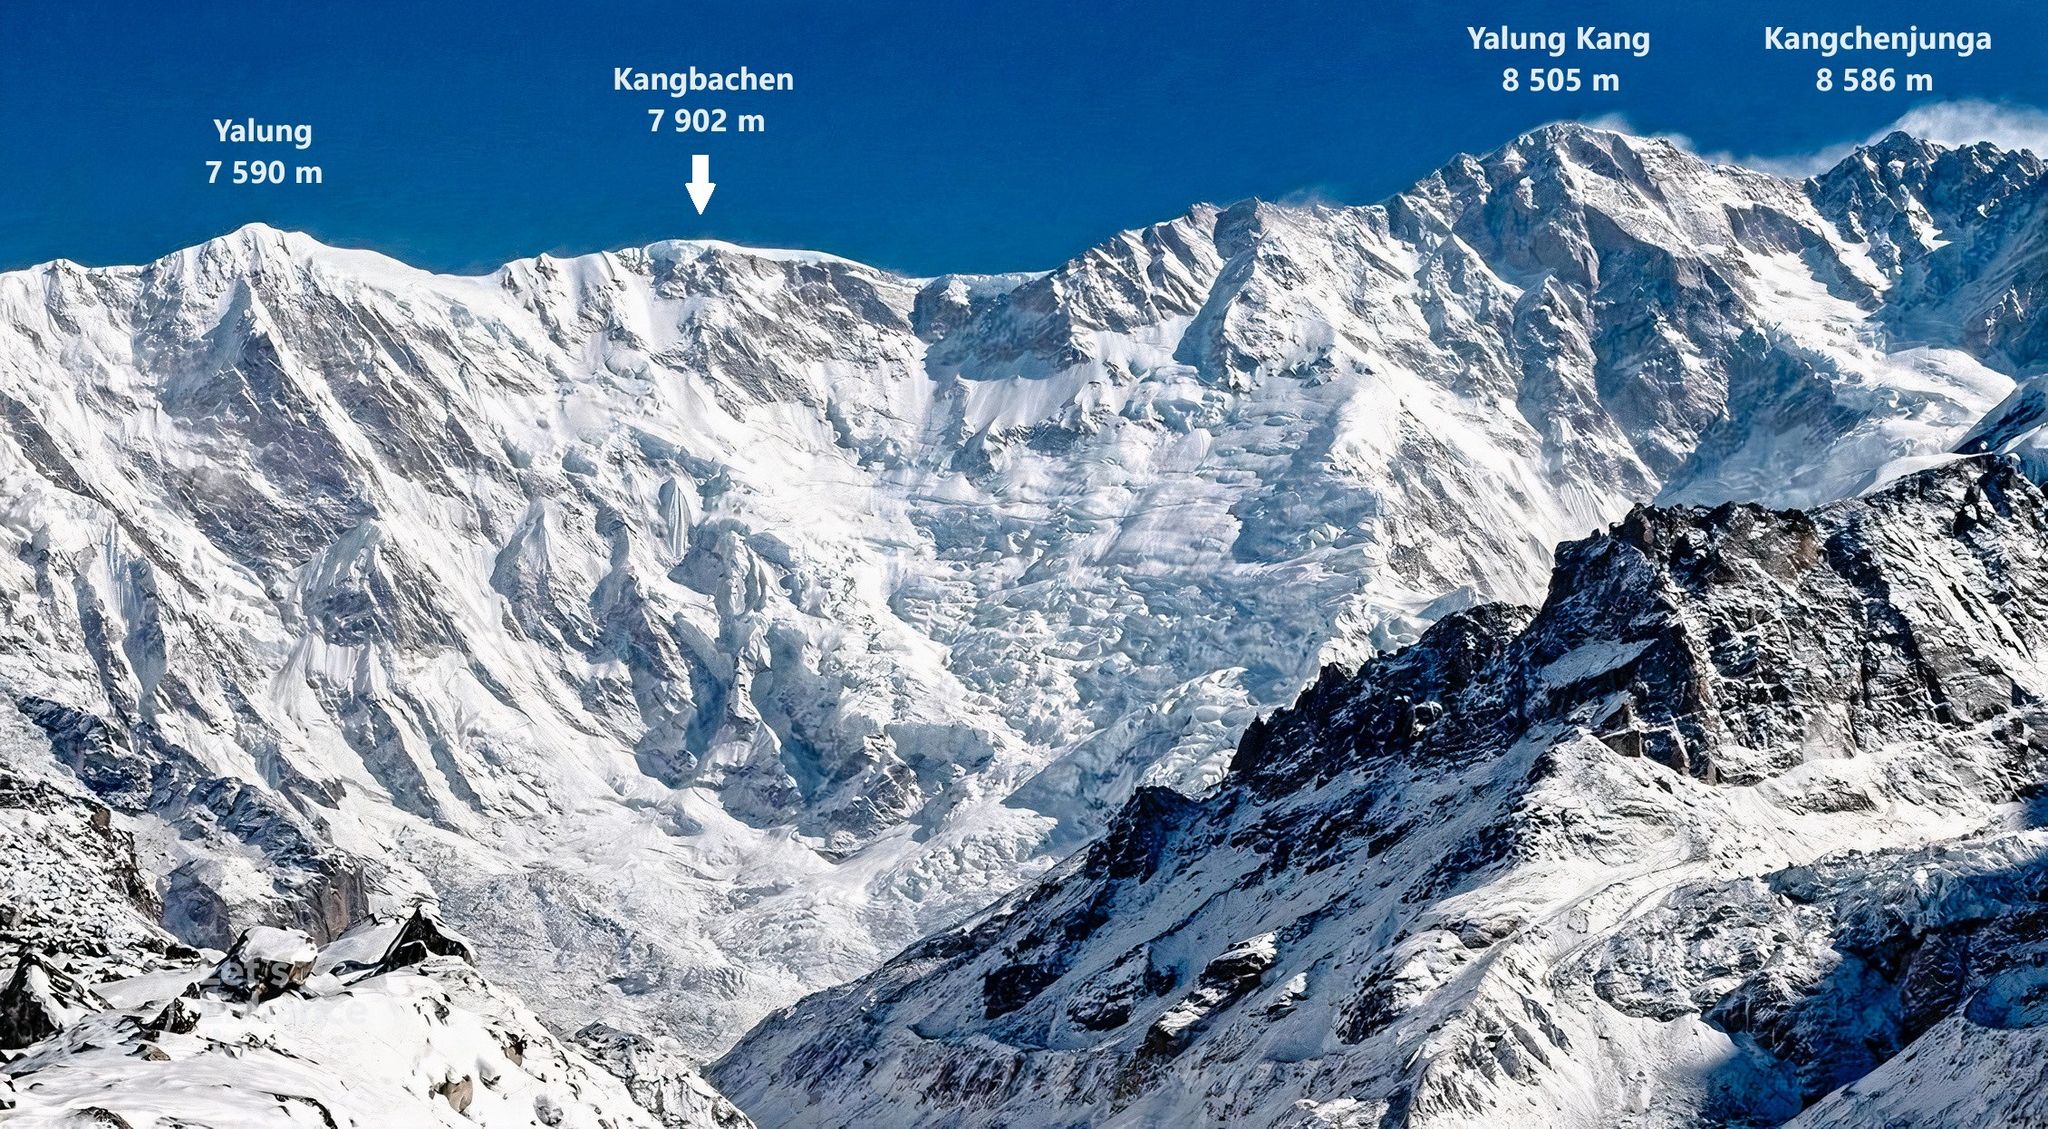 Kangchenjunga peaks